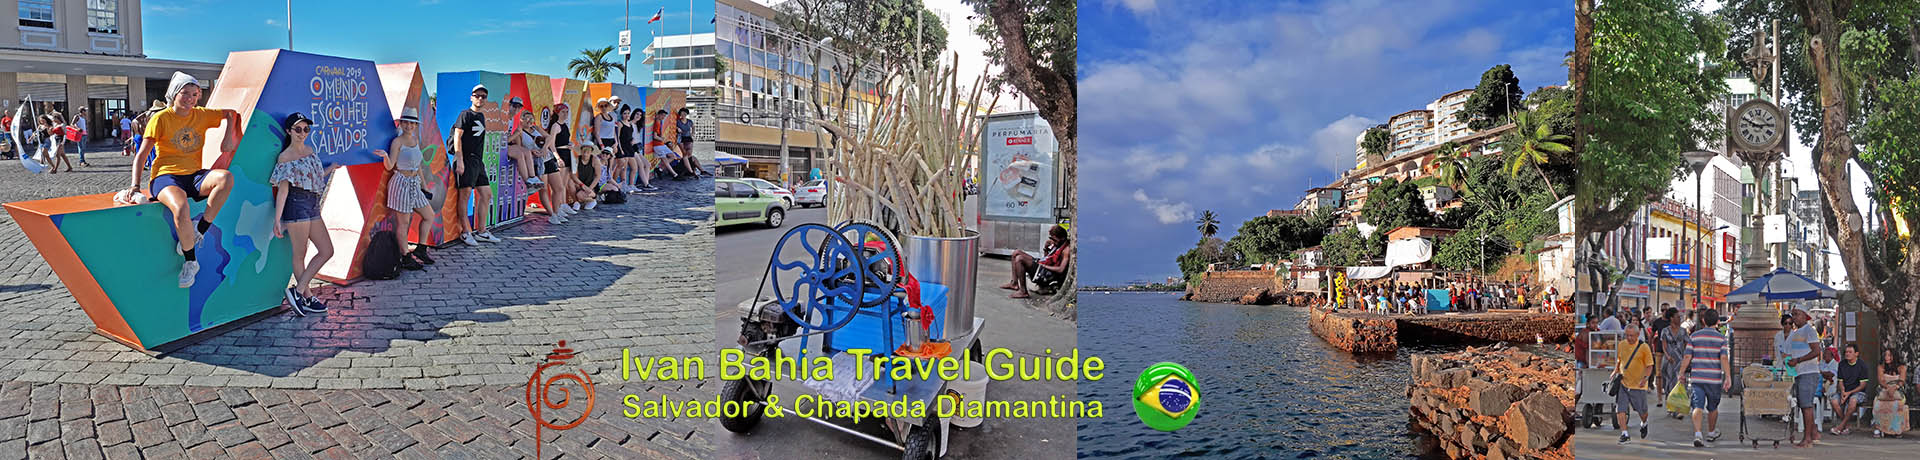 visit Salvador da Bahia with Ivan Bahia Guide / Photography by #IvanBahiaGuide ref., #ToursByLocals, #fernandobingre, @fernandobingre